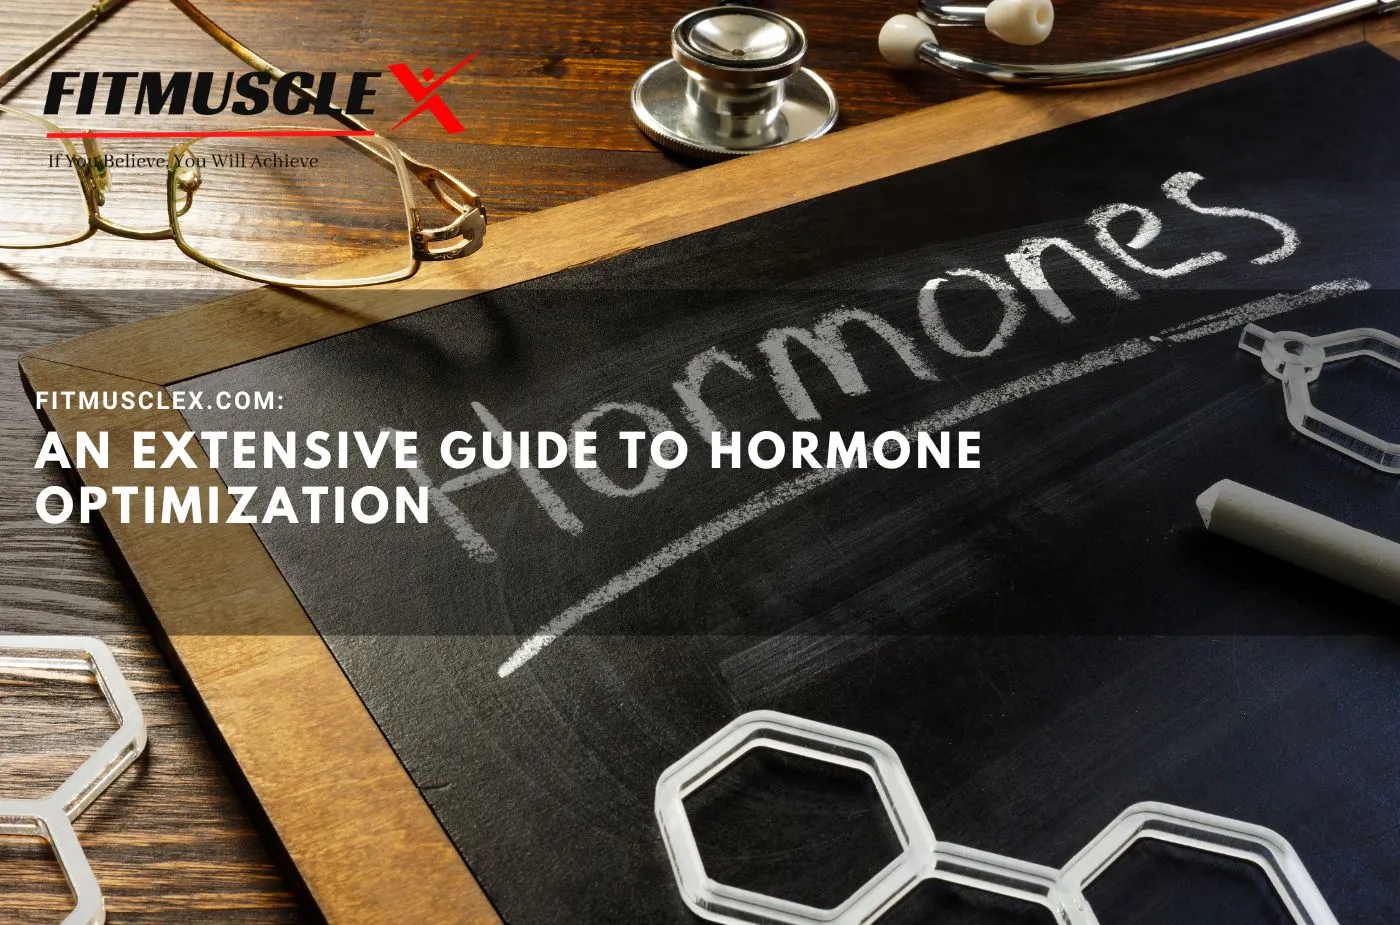 FitMuscleX.com: An Extensive Guide to Hormone Optimization